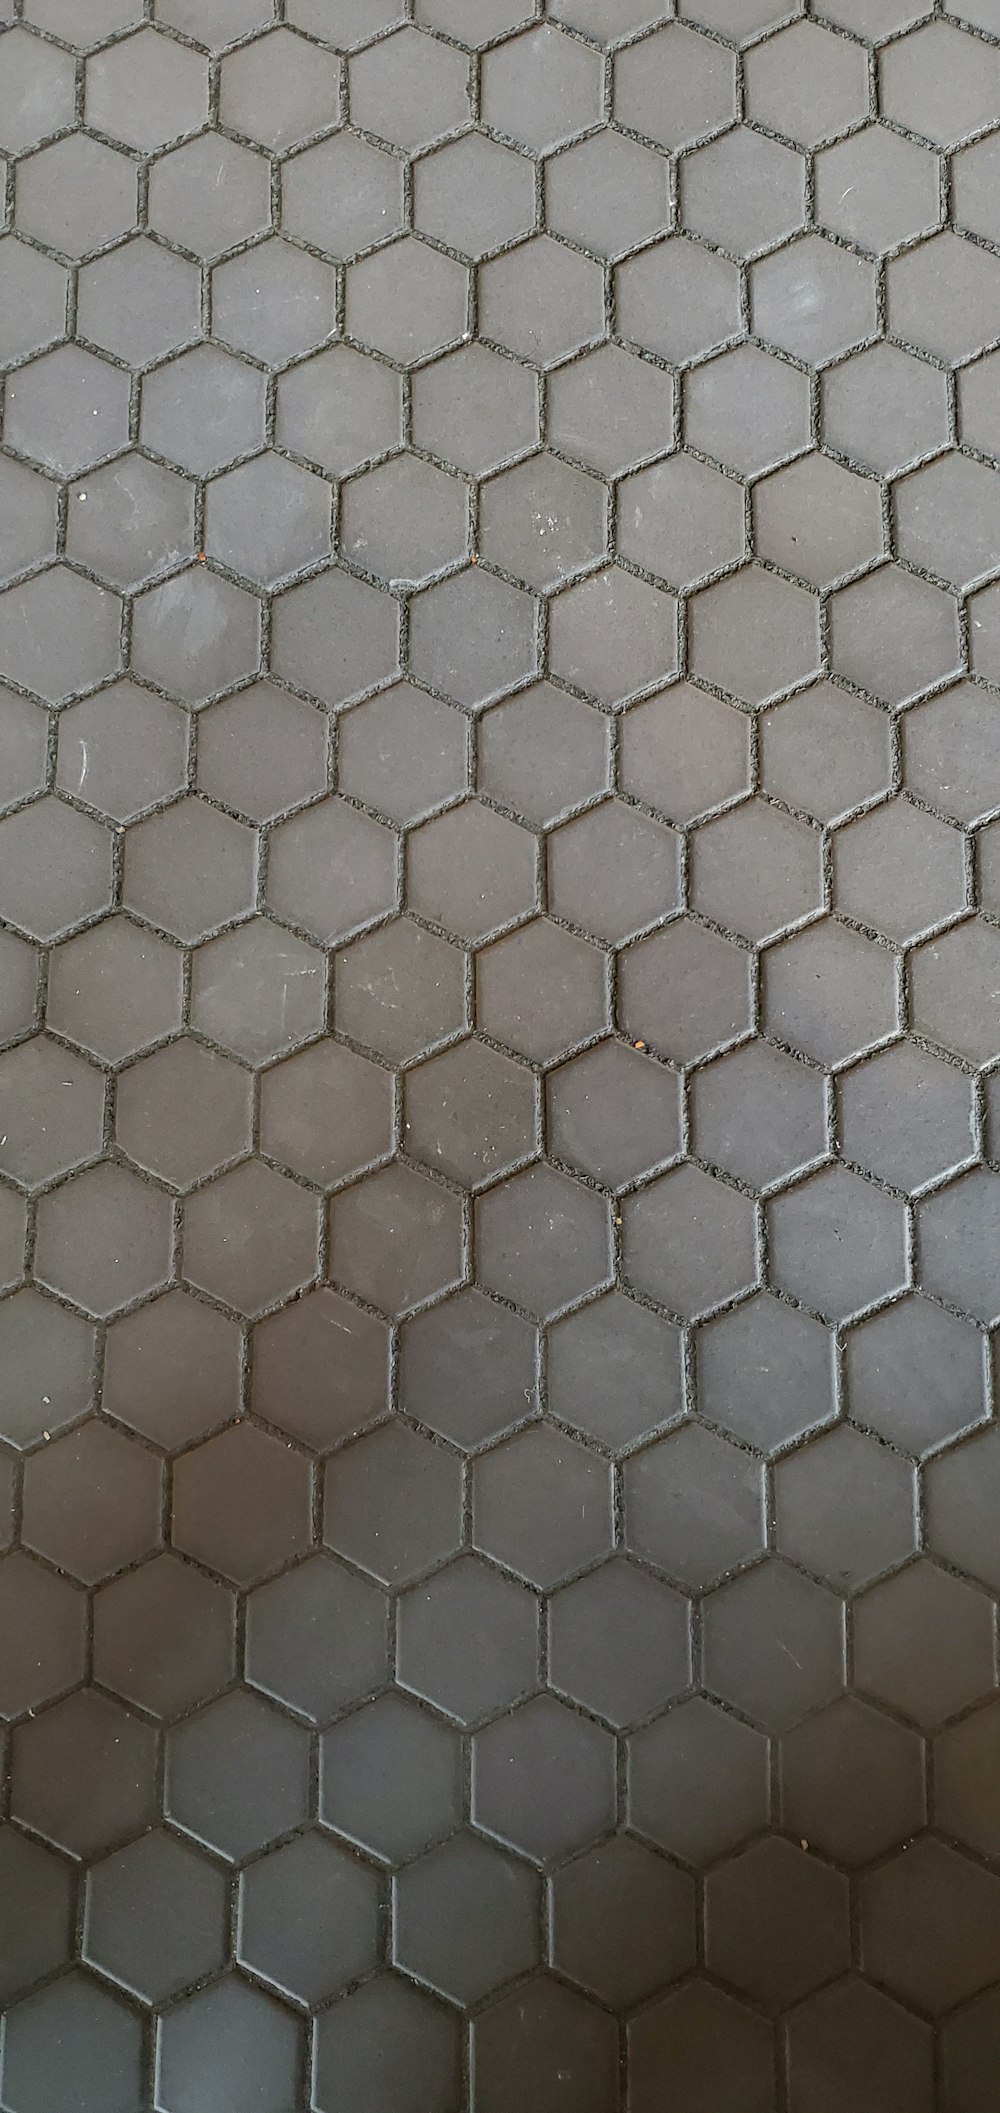 gray and white floor tiles